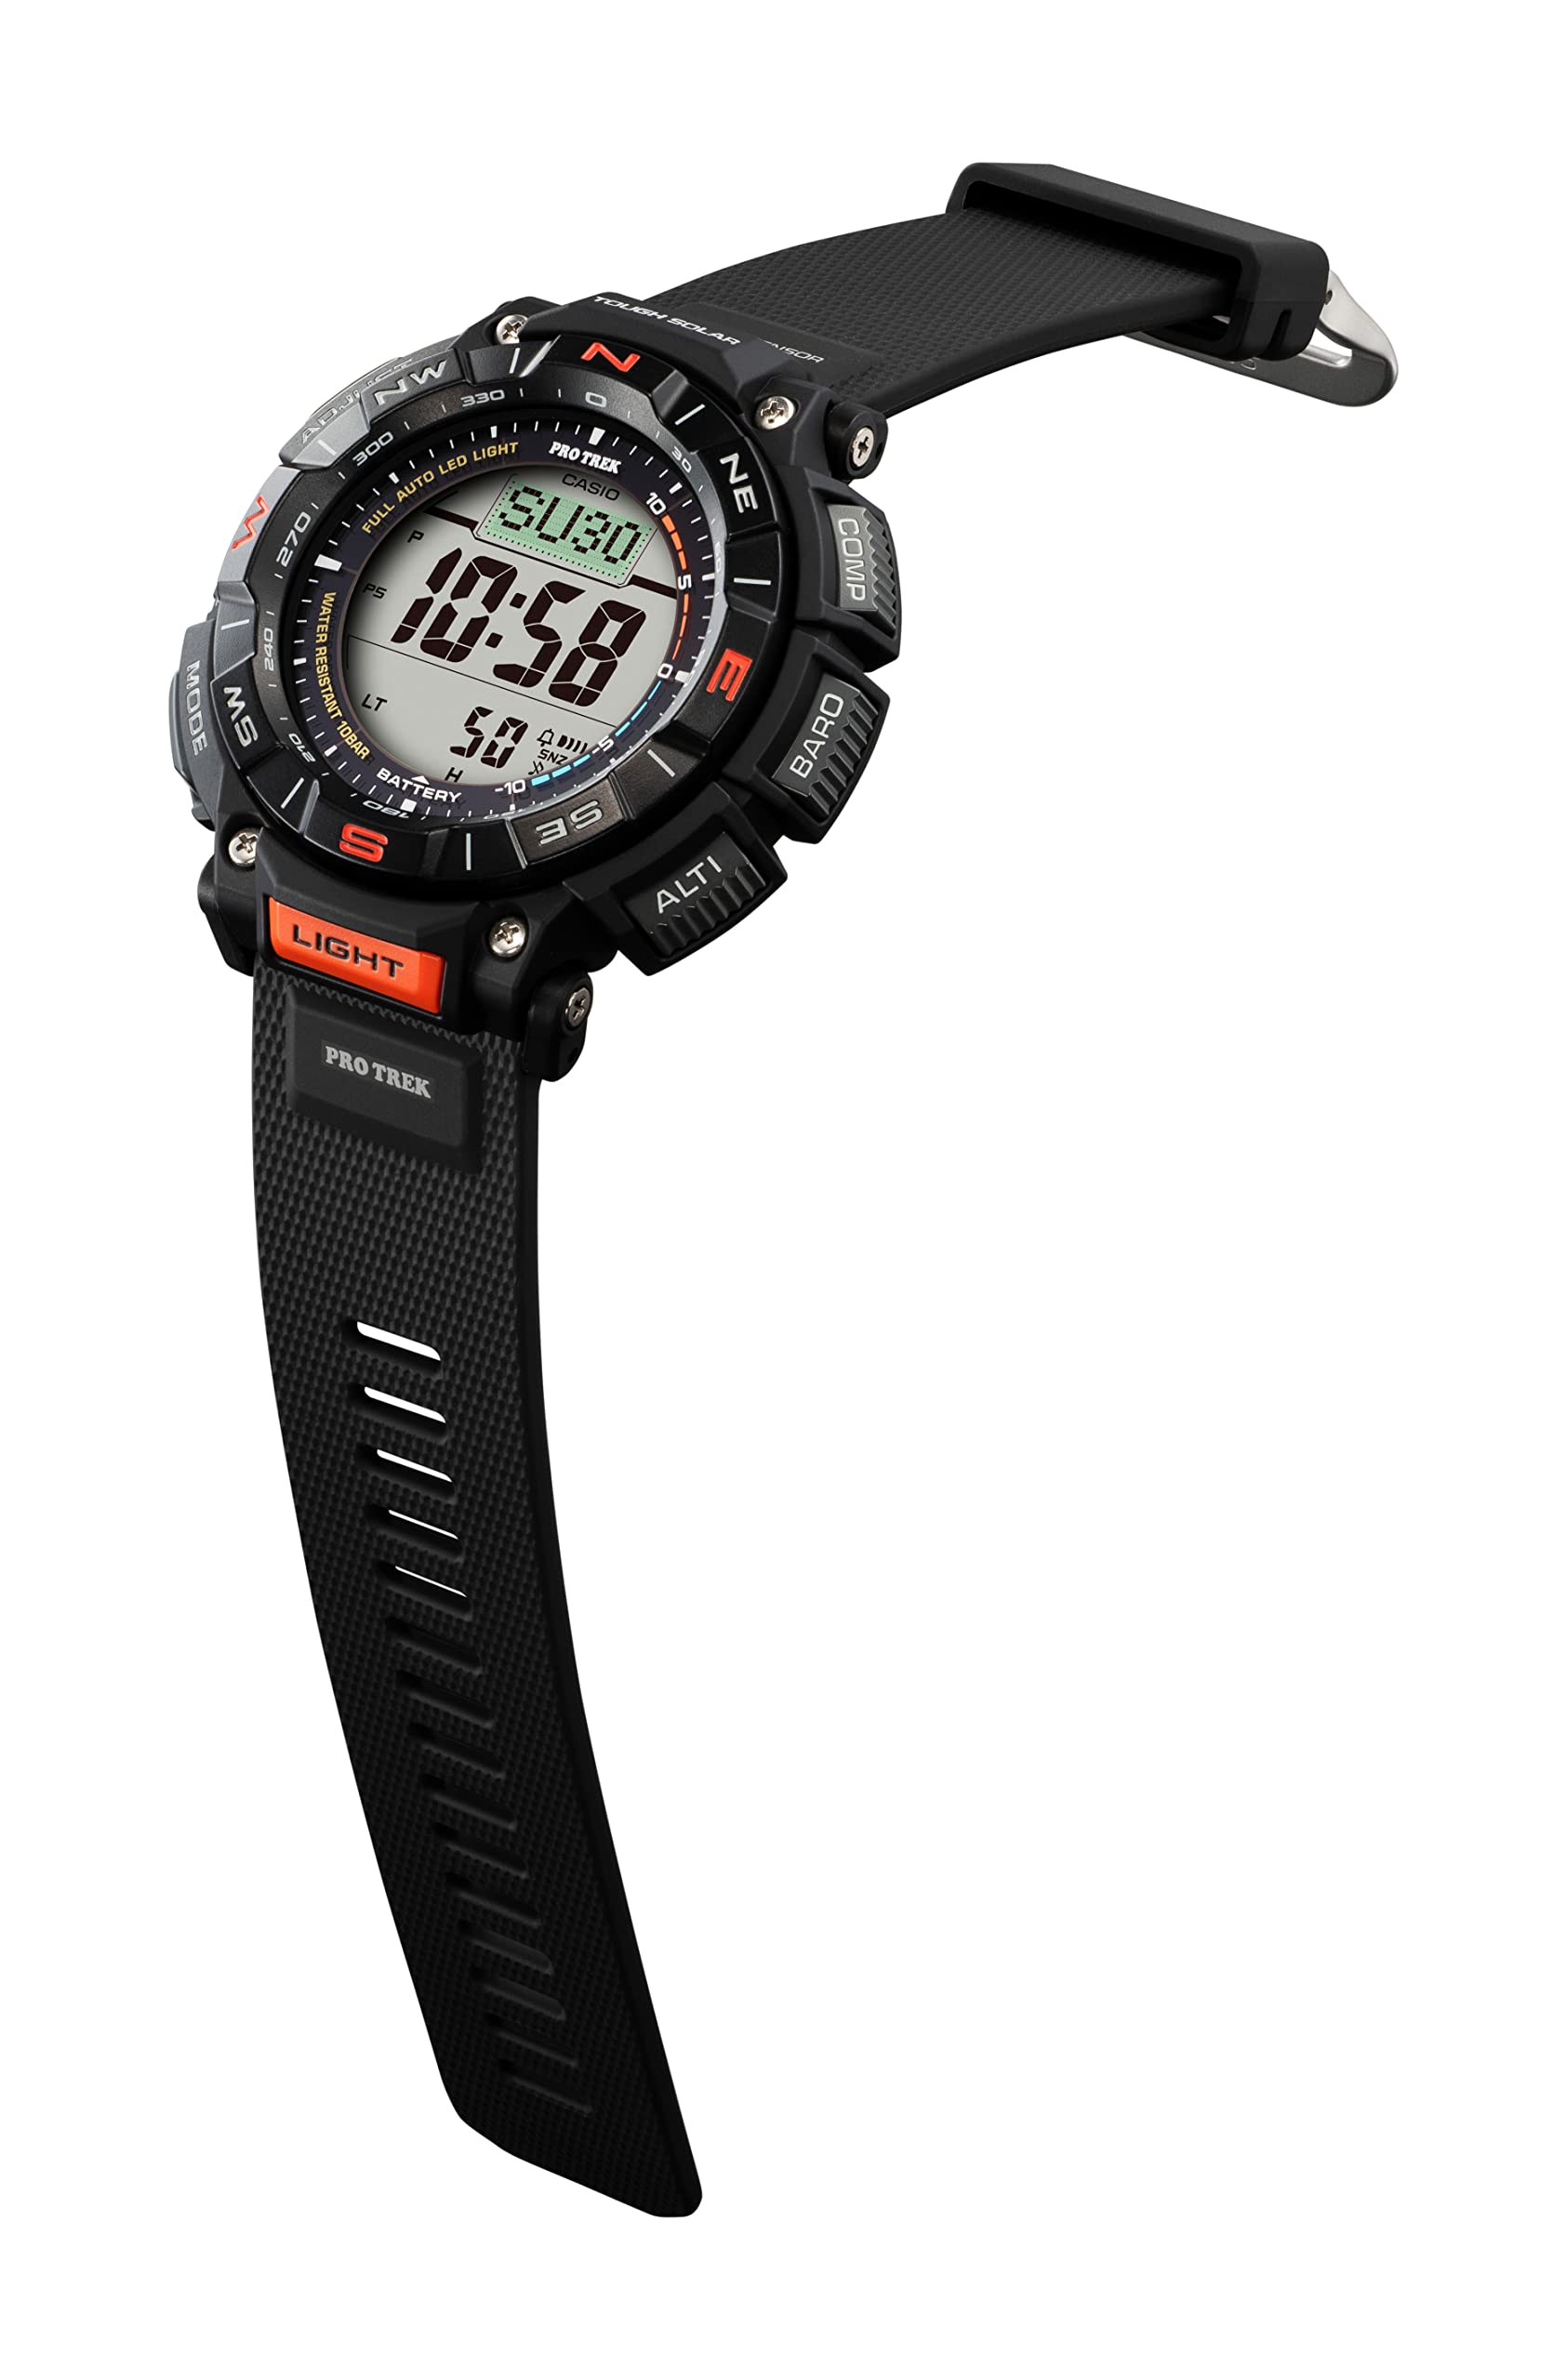 Casio Pro Trek Bio Mass Tough Solar Triple Sensor w/Thermometer Altimeter Barometer Compass World Time Men's Titanium Band Watch